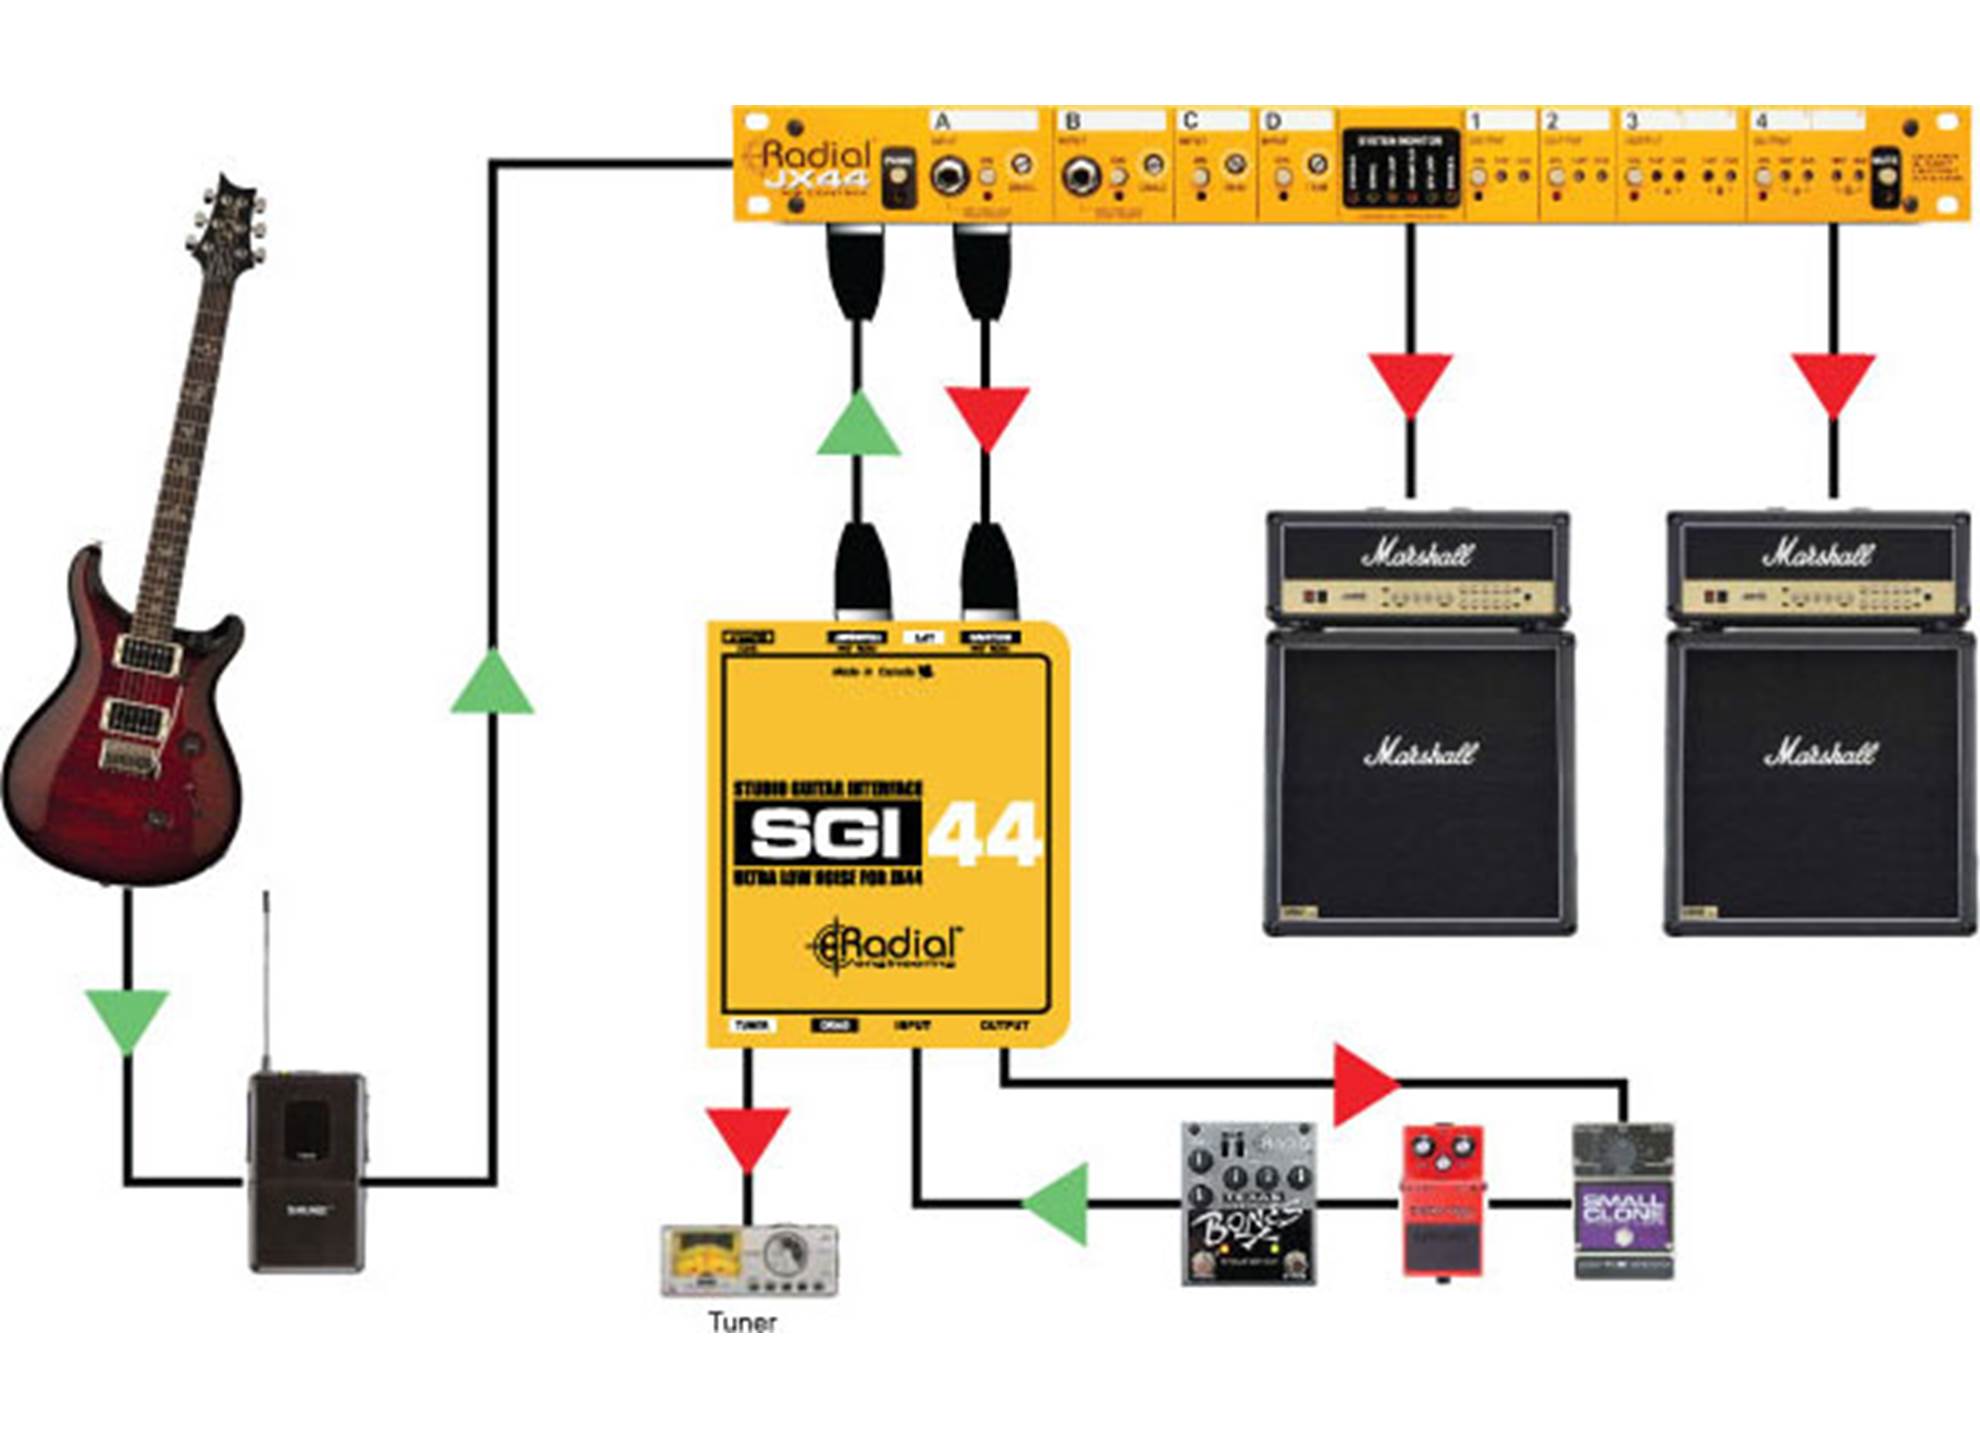 SGI44 Studio Guitar Interface